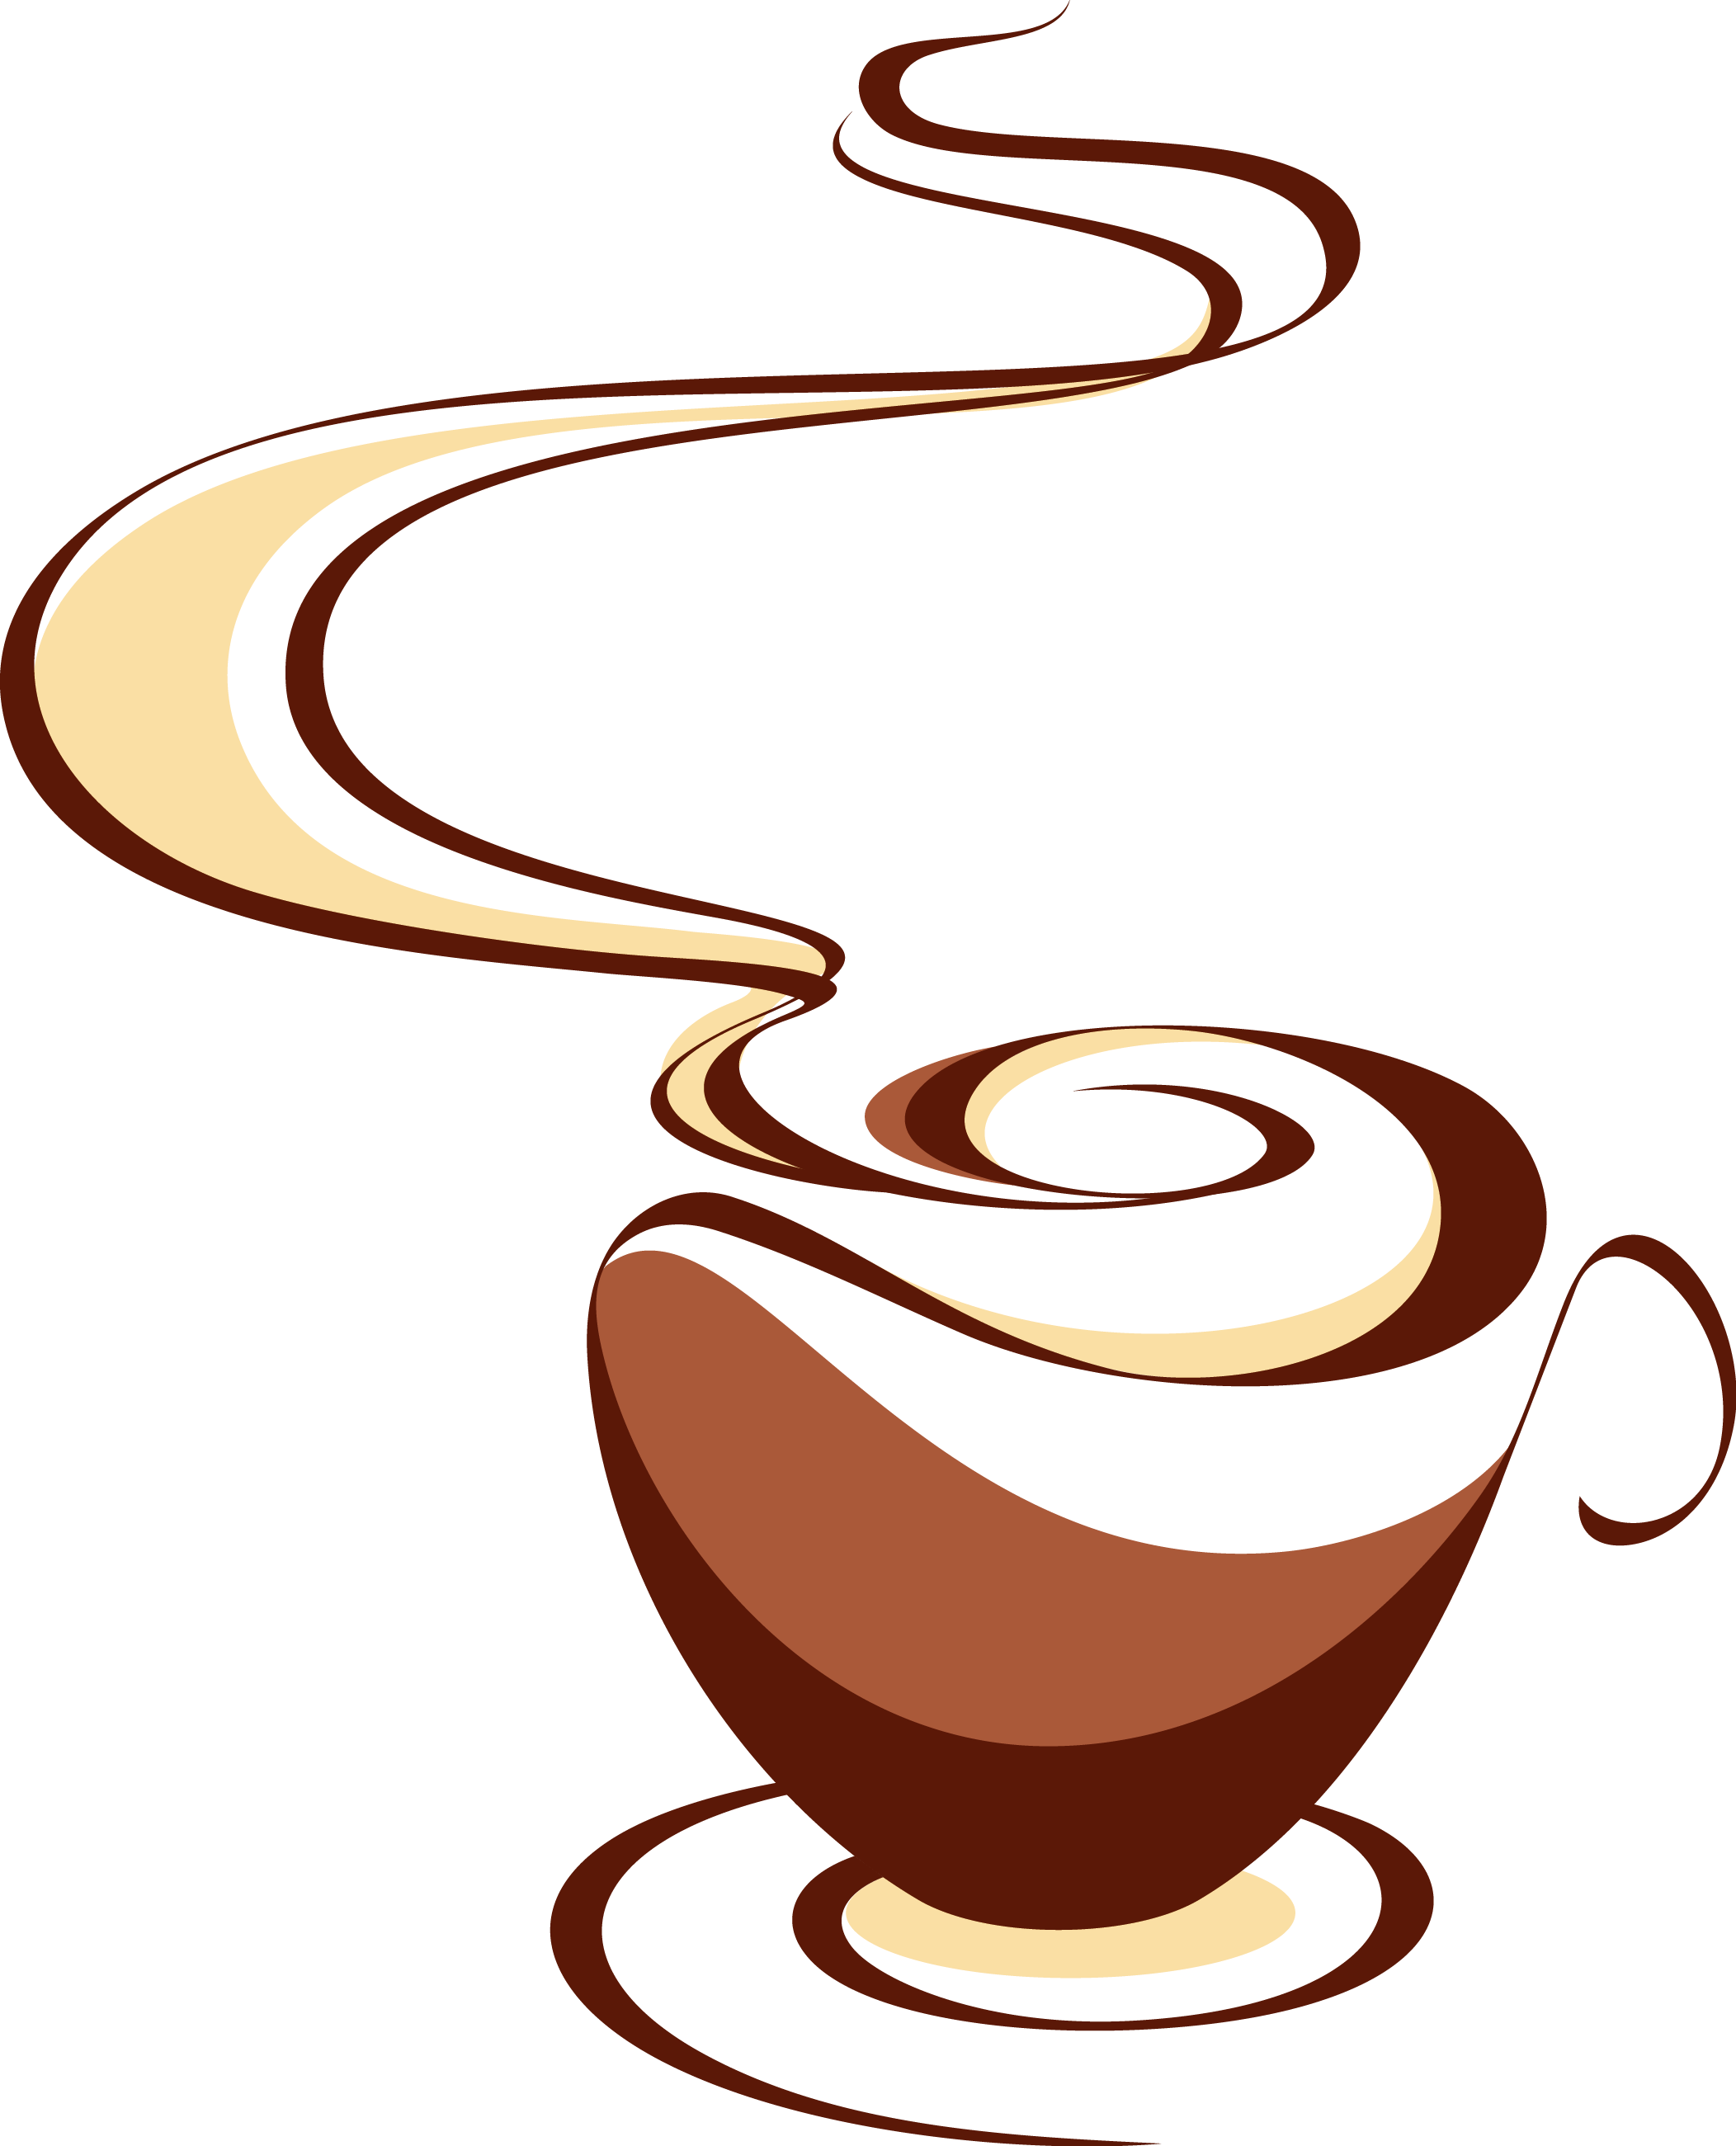 Coffee Cup Cappuccino Tea Cafe - Cafe Diem Greeting Card (2104x2601)